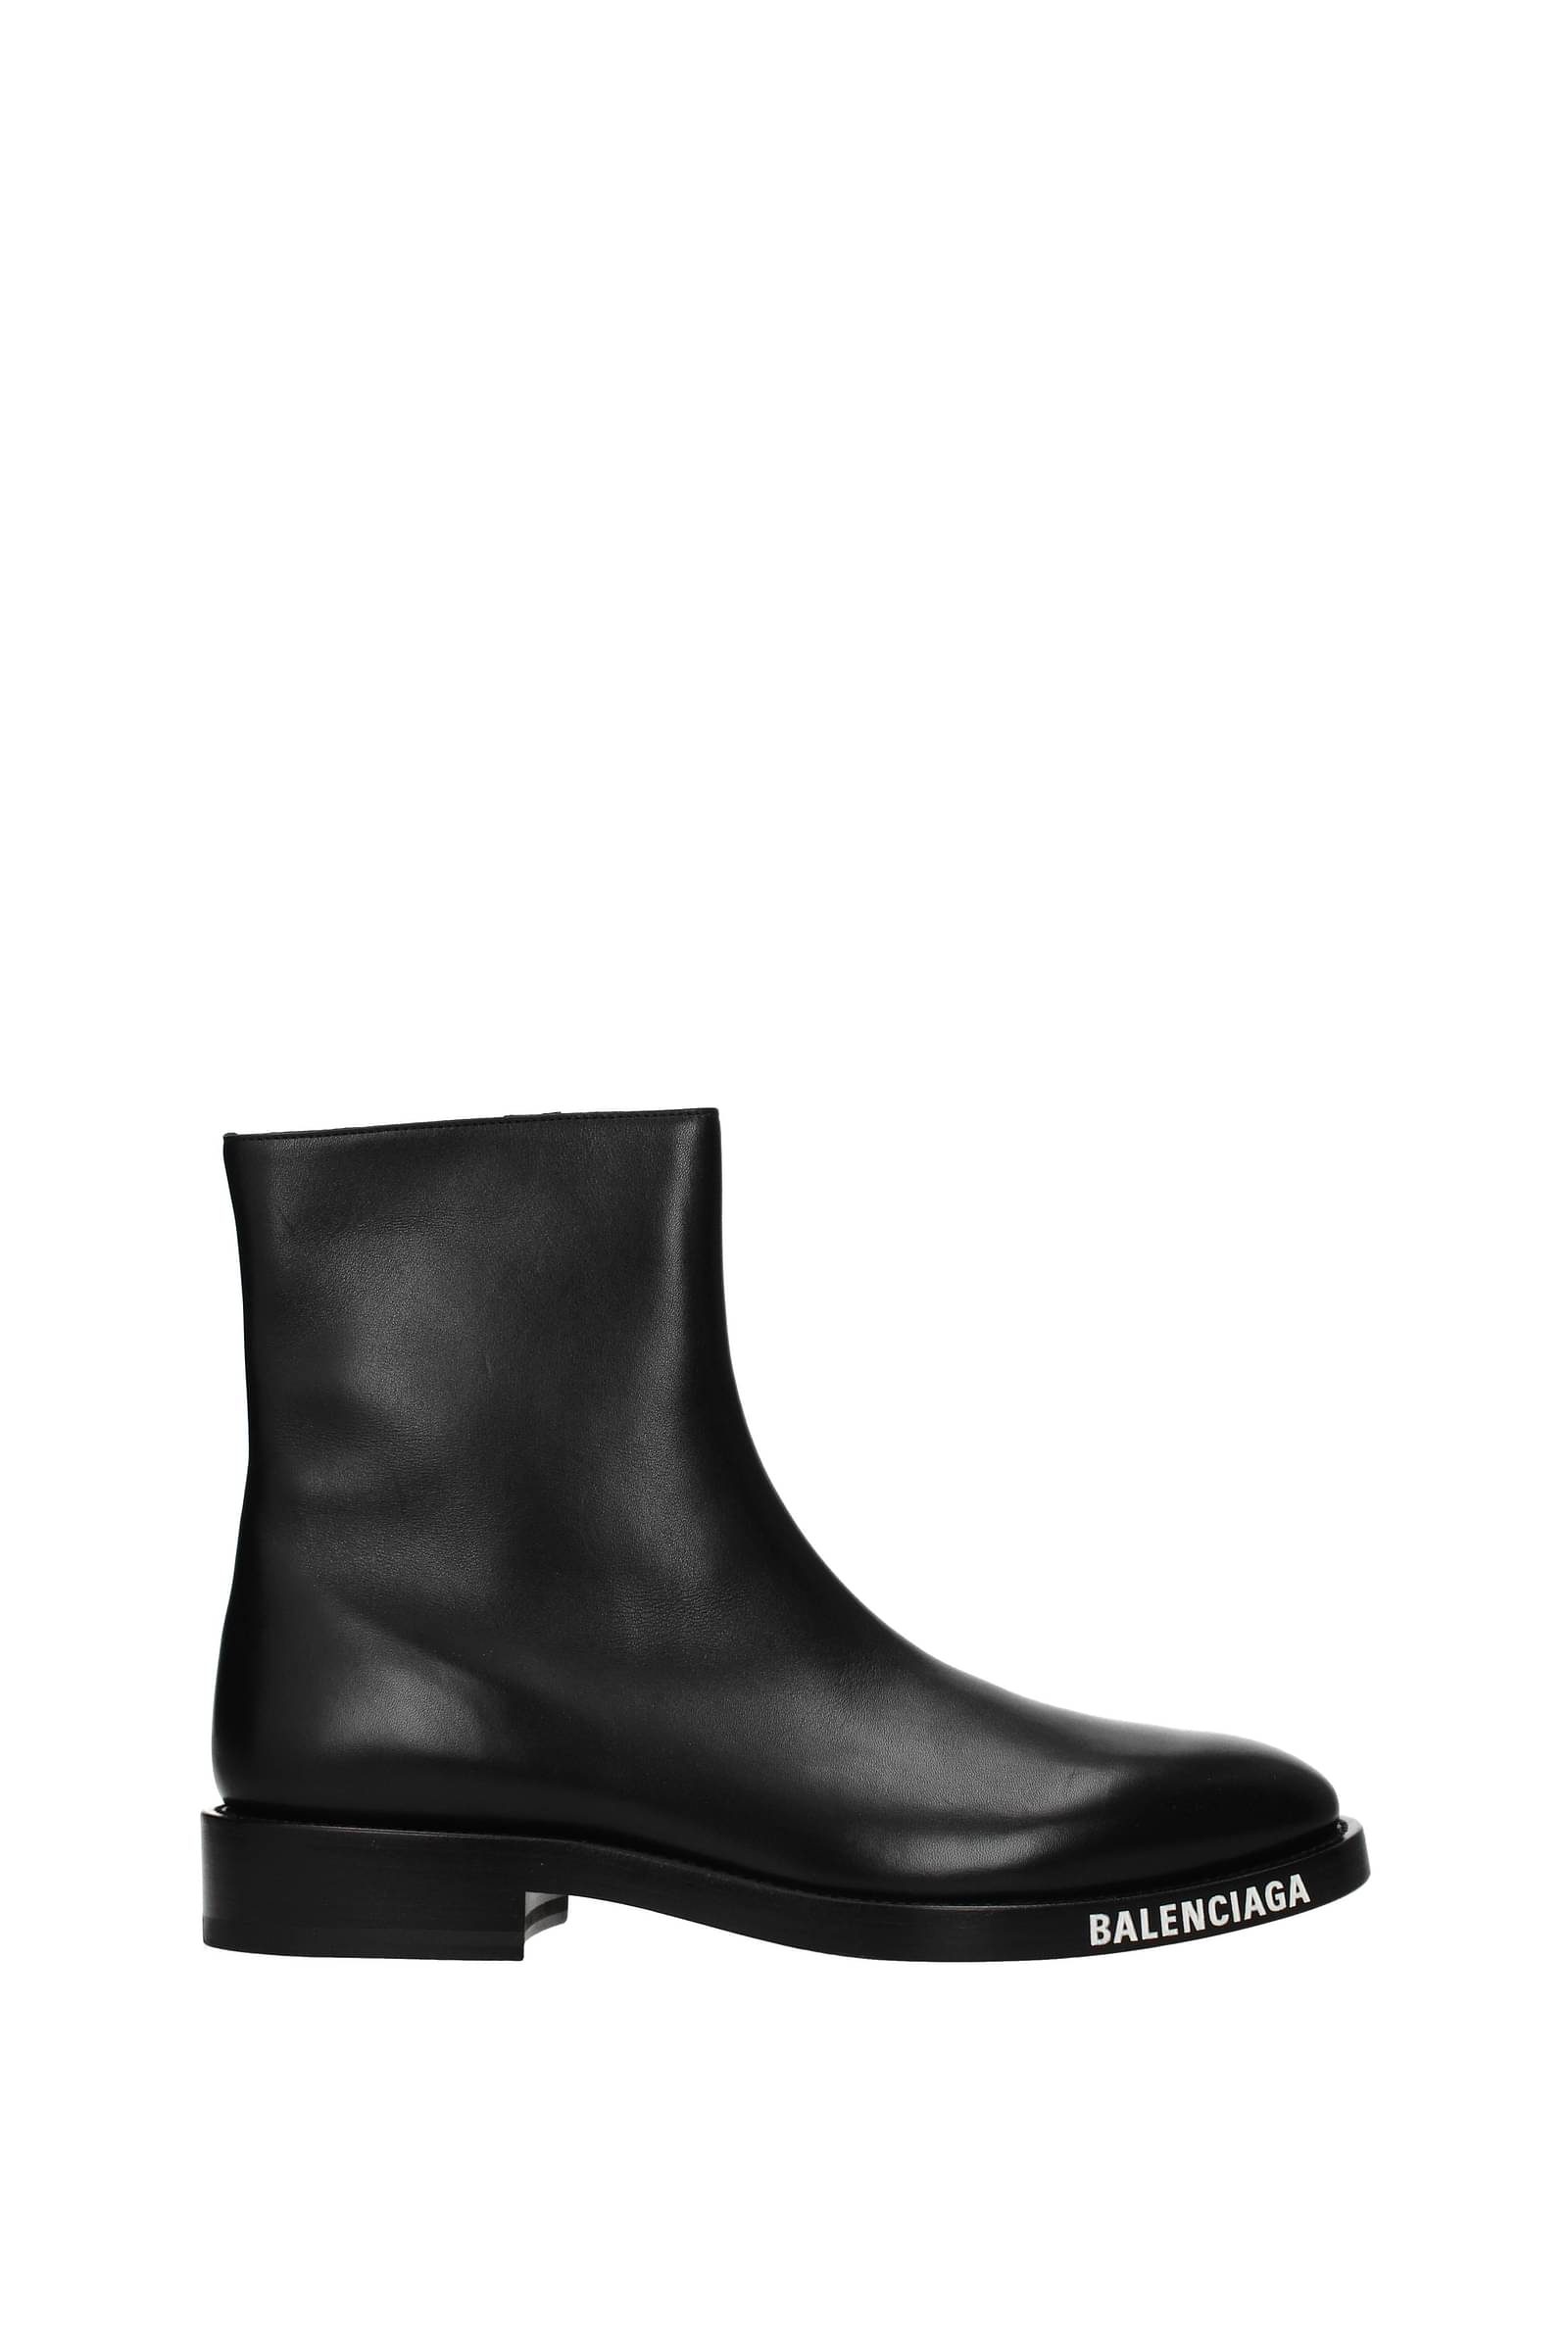 Balenciaga Squaretoe Leather Boots in Black for Men  Lyst